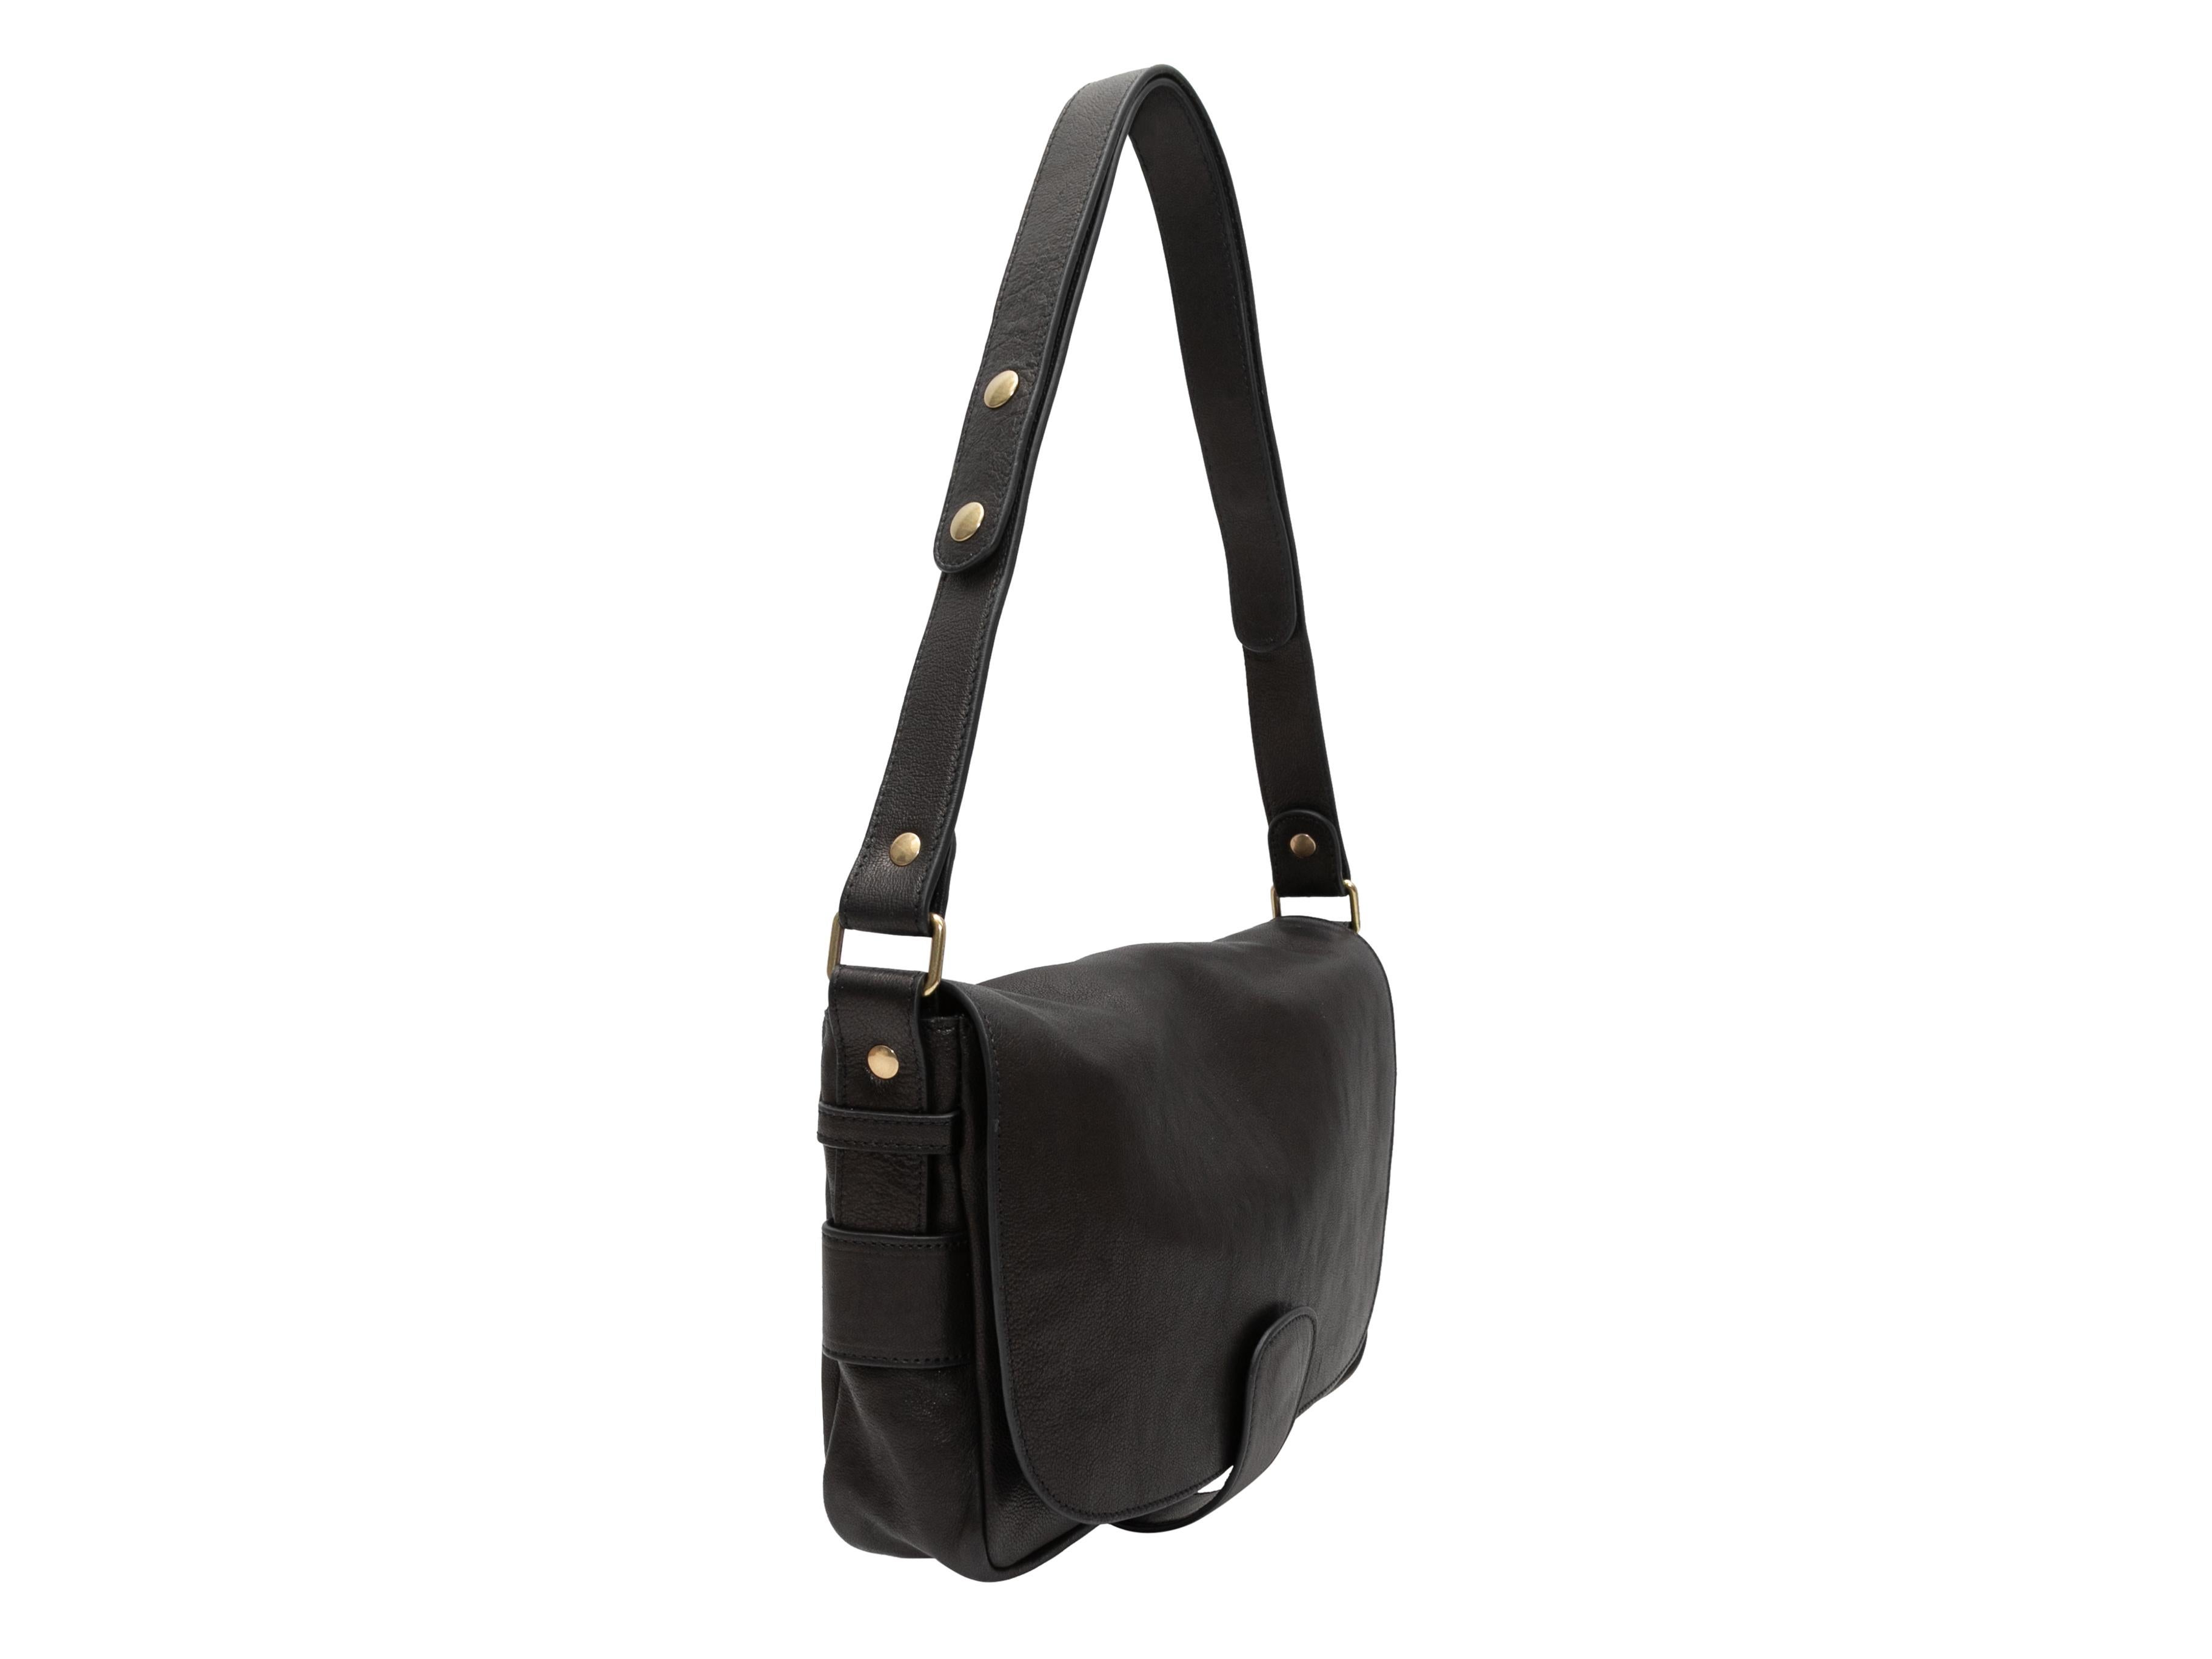 Black Pablo Paris Leather Shoulder Bag. This shoulder bag features a leather body, gold-tone hardware, a single flat shoulder strap, and a front closure. 11